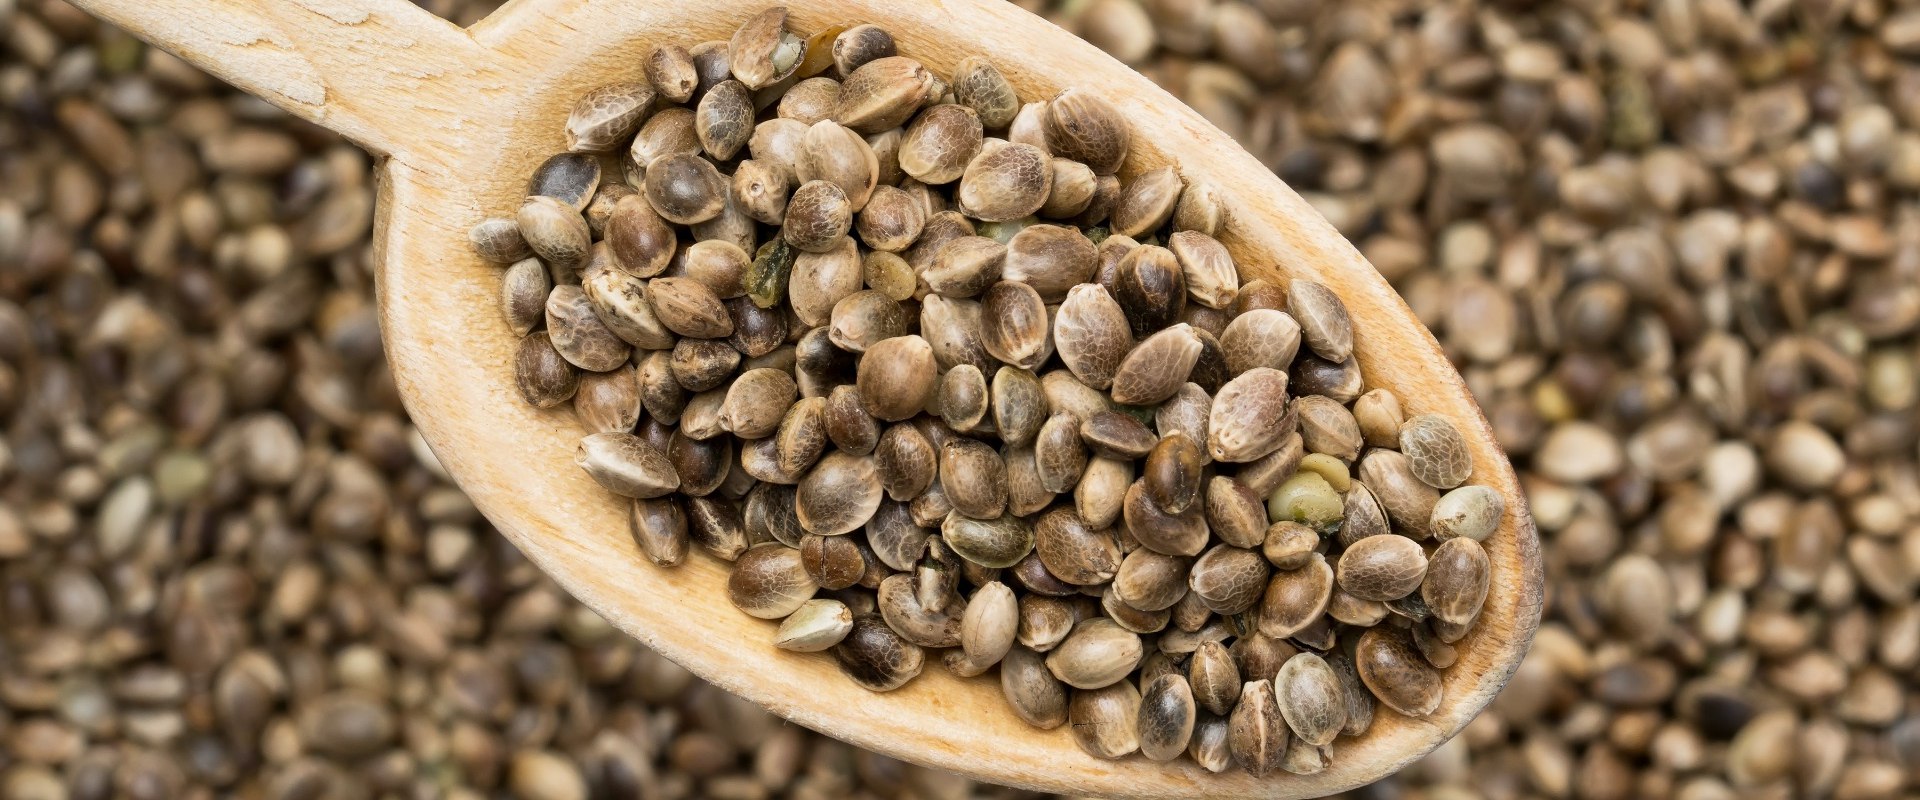 Will Eating Hemp Seeds Make You Fail a Drug Test?